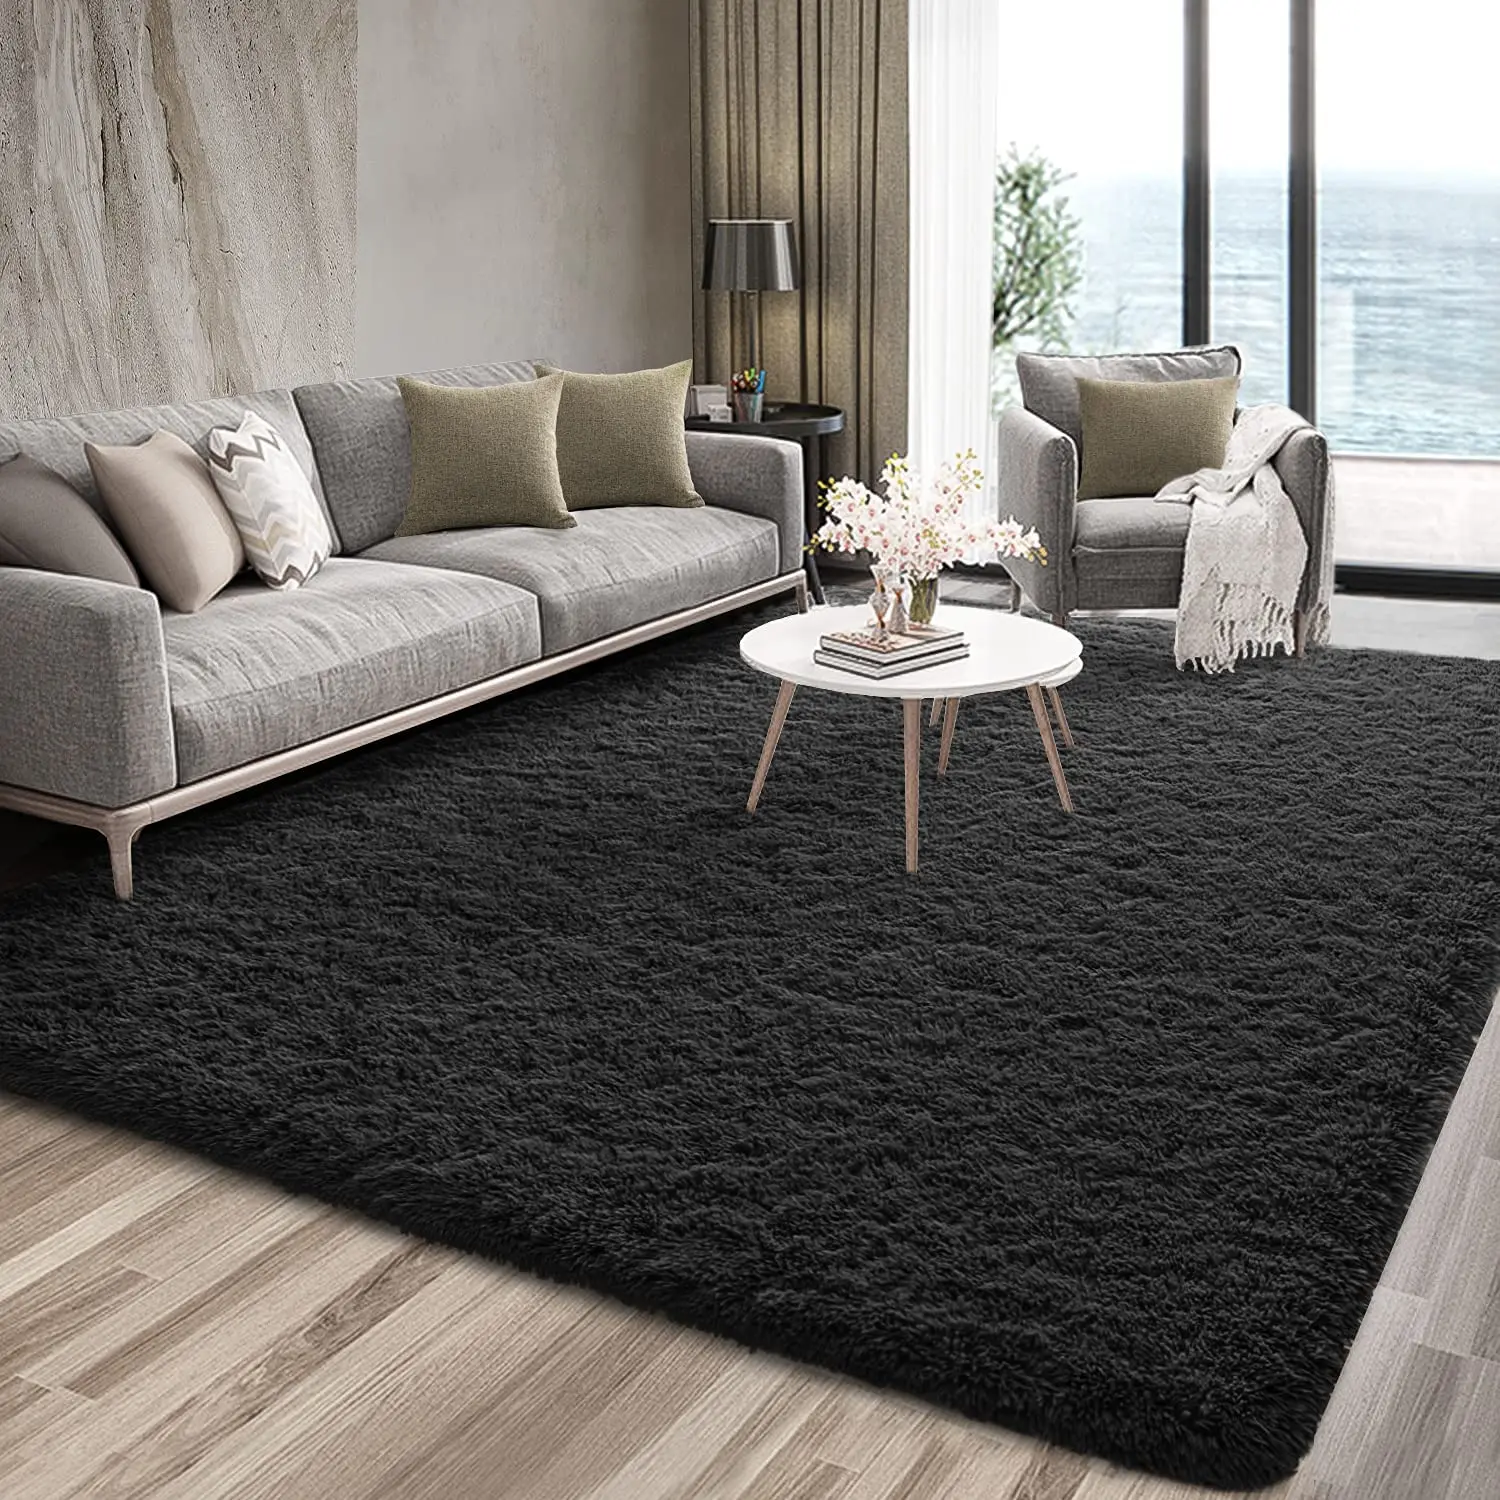 

Soft Fluffy Black Area Rugs Living Room Carpet Shag Furry Fur Rug Modern Plush Decorative Nursery Rugs Solid Accent Floor Rugs